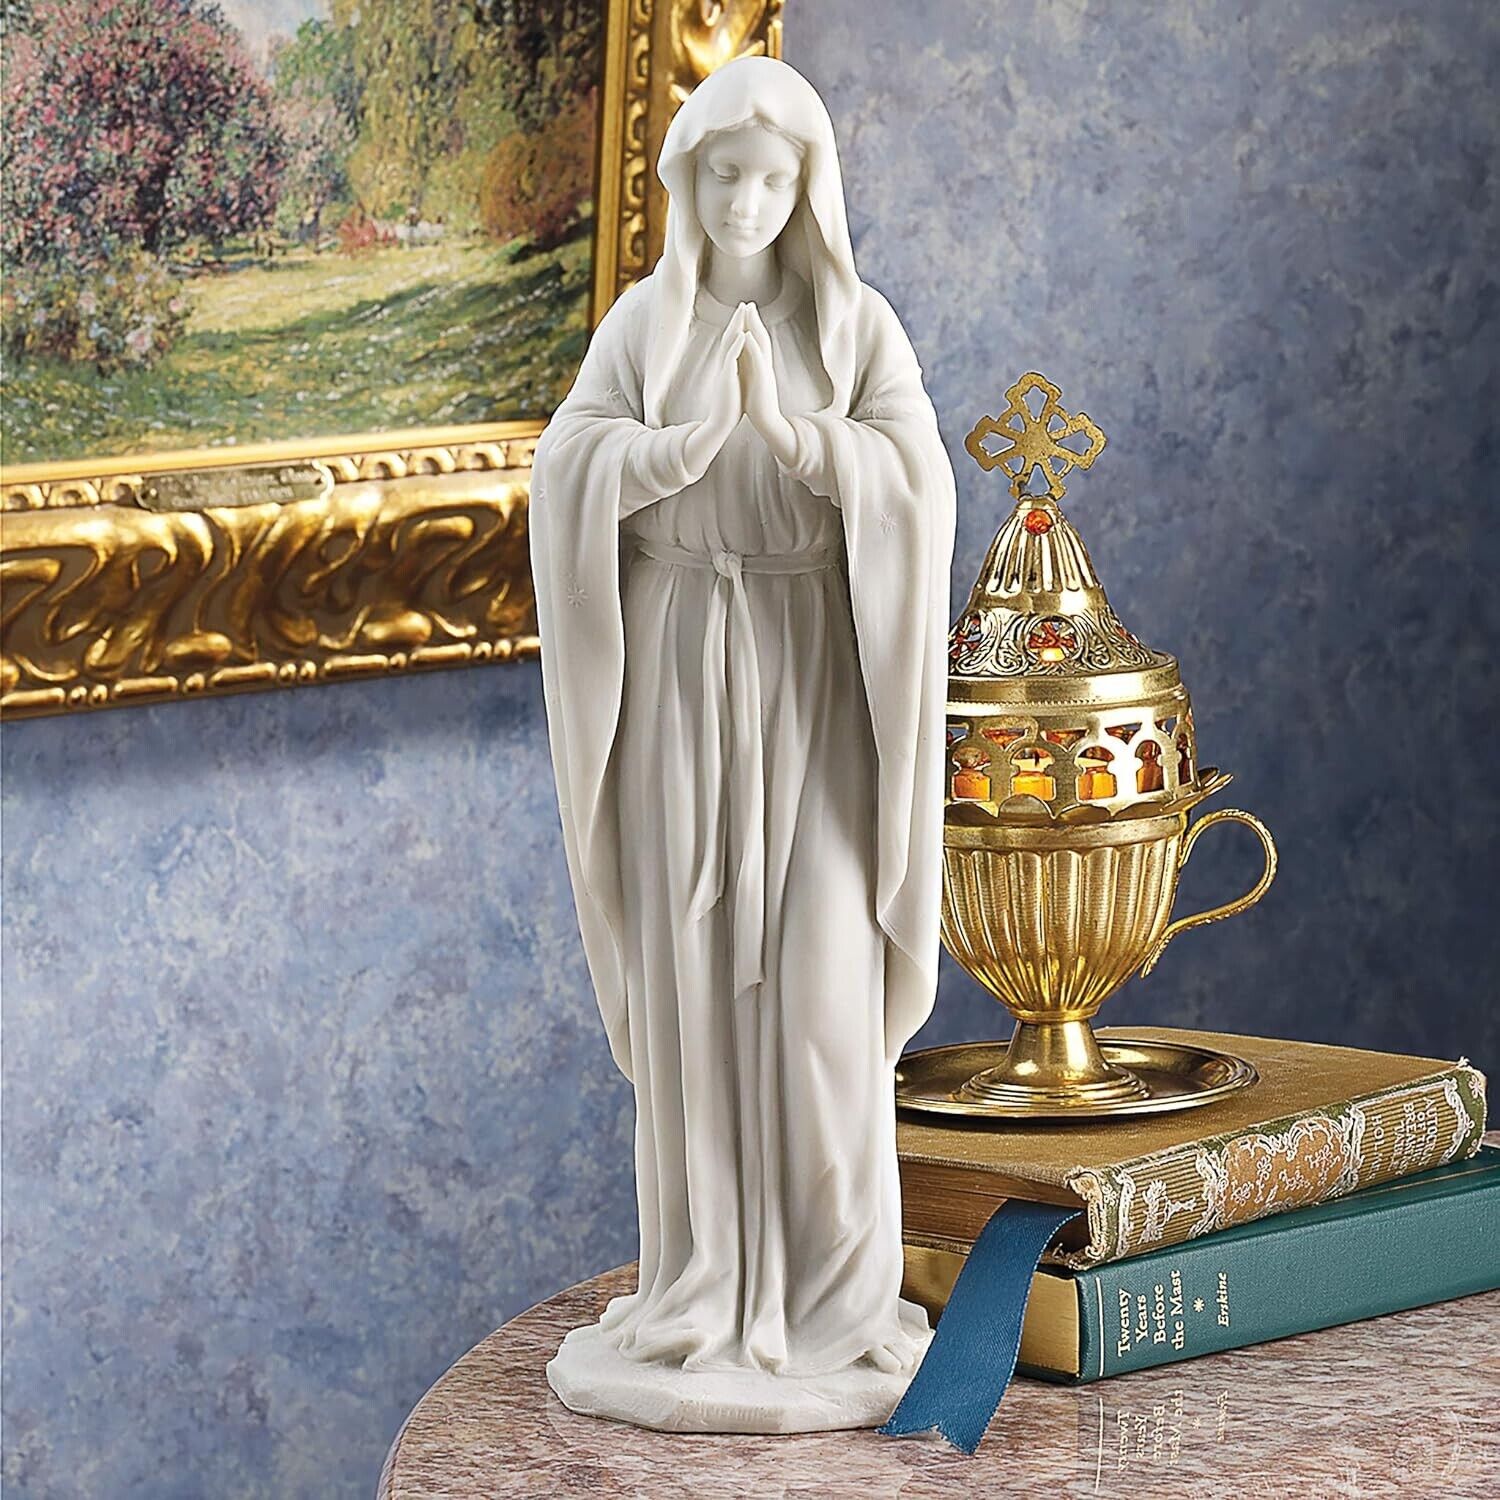 Blessed Virgin Mary Statue Lady Madonna Catholic Religious Figurine Home Decor